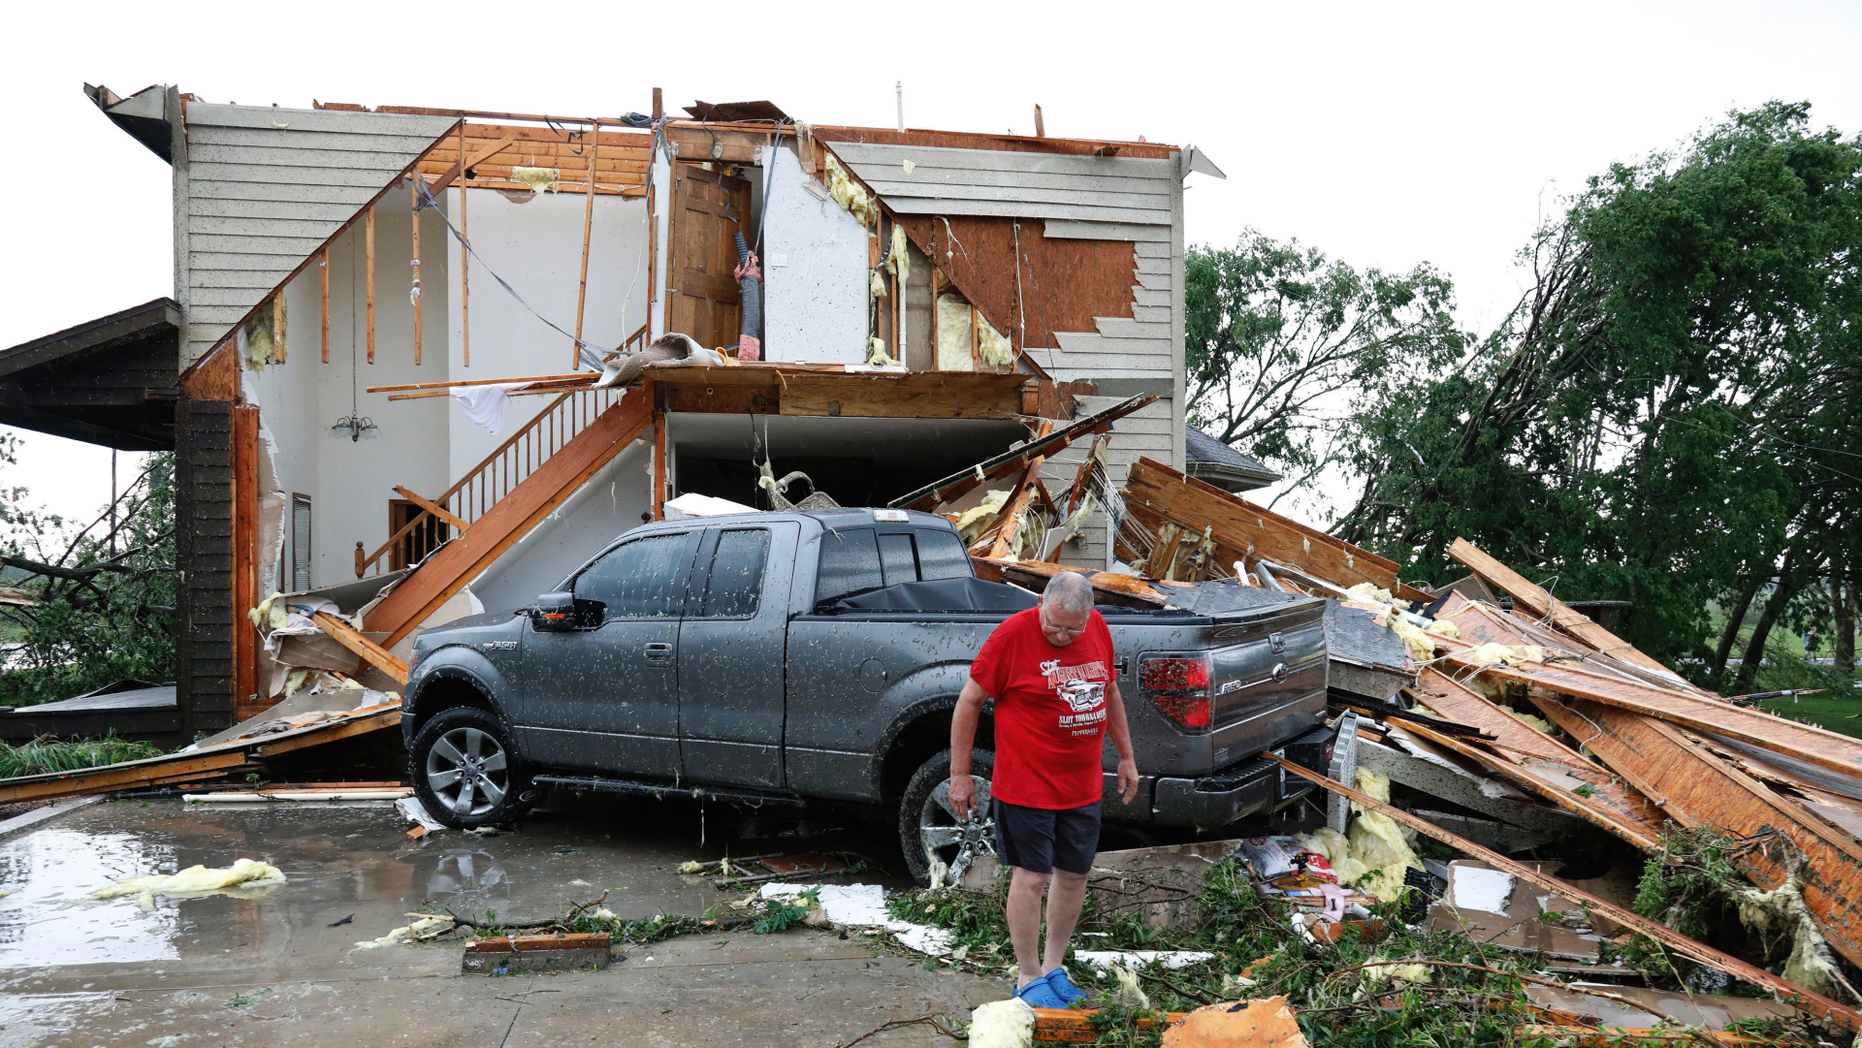 Joe Armison examines the damage done to his home after a tornado hit the suburbs of Eudora, Kansas on Tuesday, May 28, 2019. (AP Photo / Colin E. Braley)